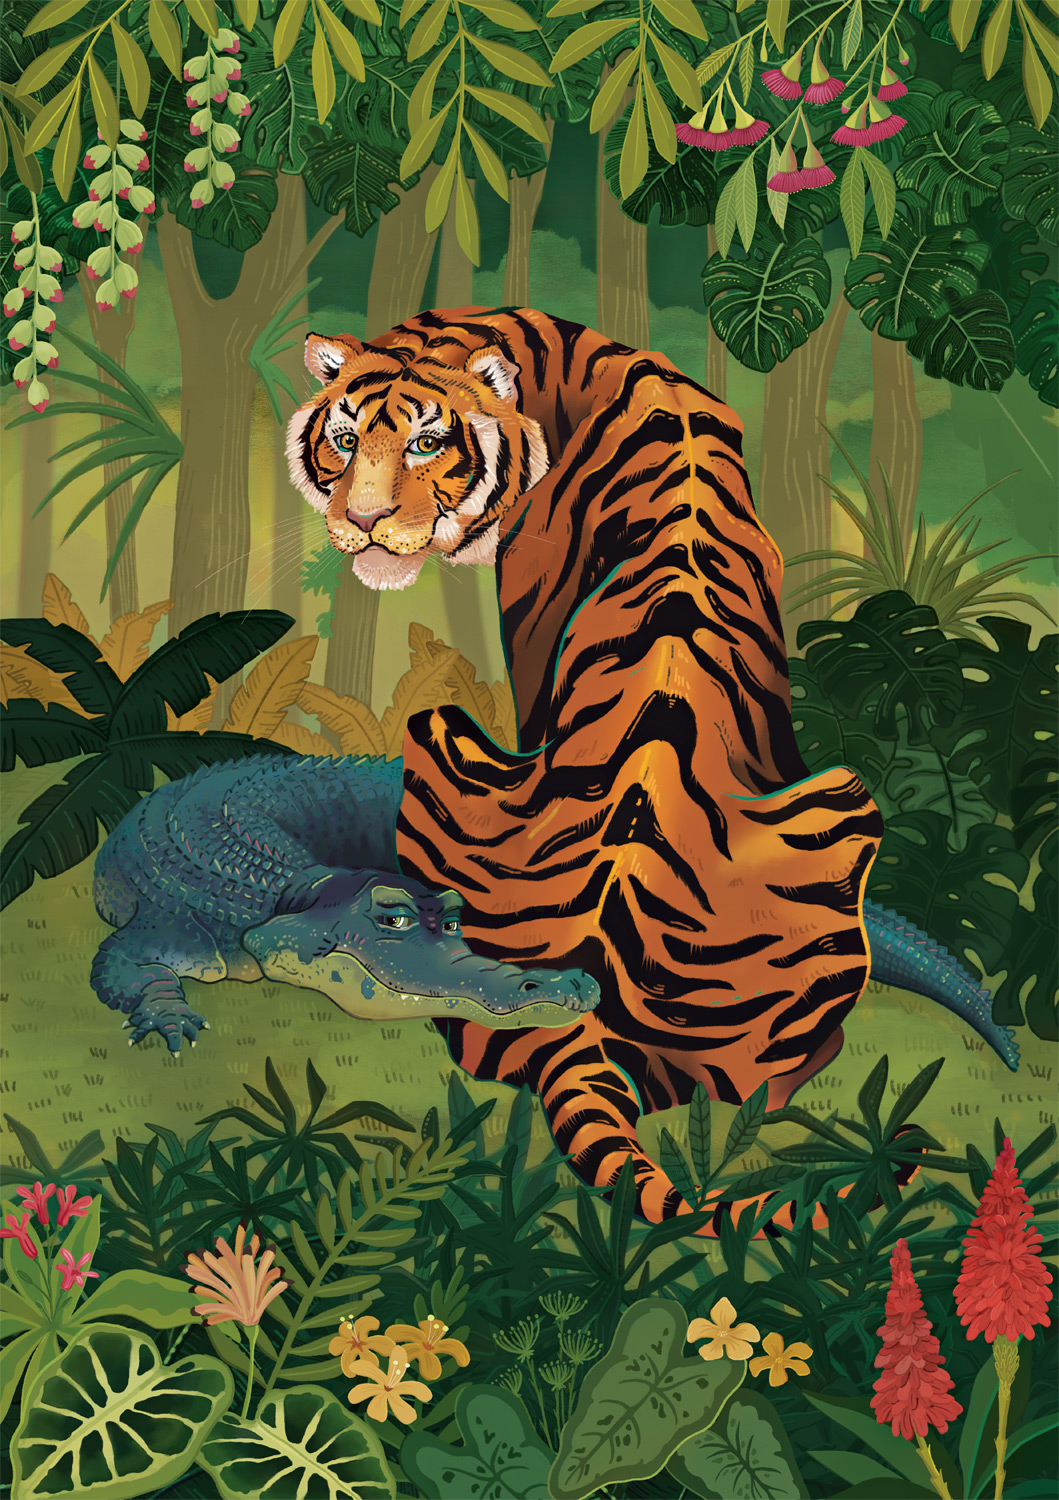 Tiger and Crocodile Jungle Animals Jigsaw Puzzle